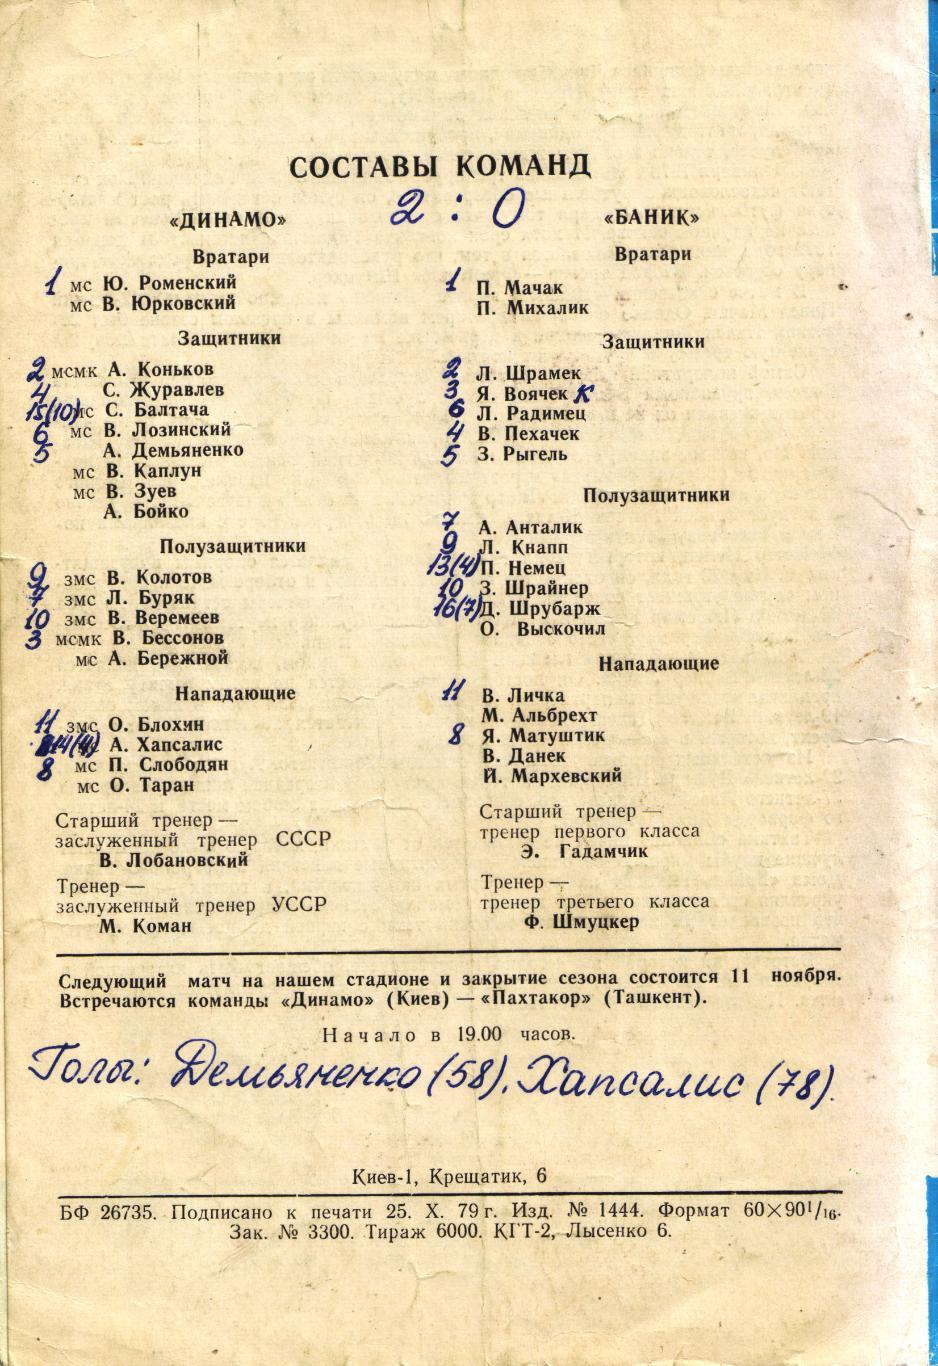 Динамо Киев - Баник Острава, ЧССР 07.11.1979 1